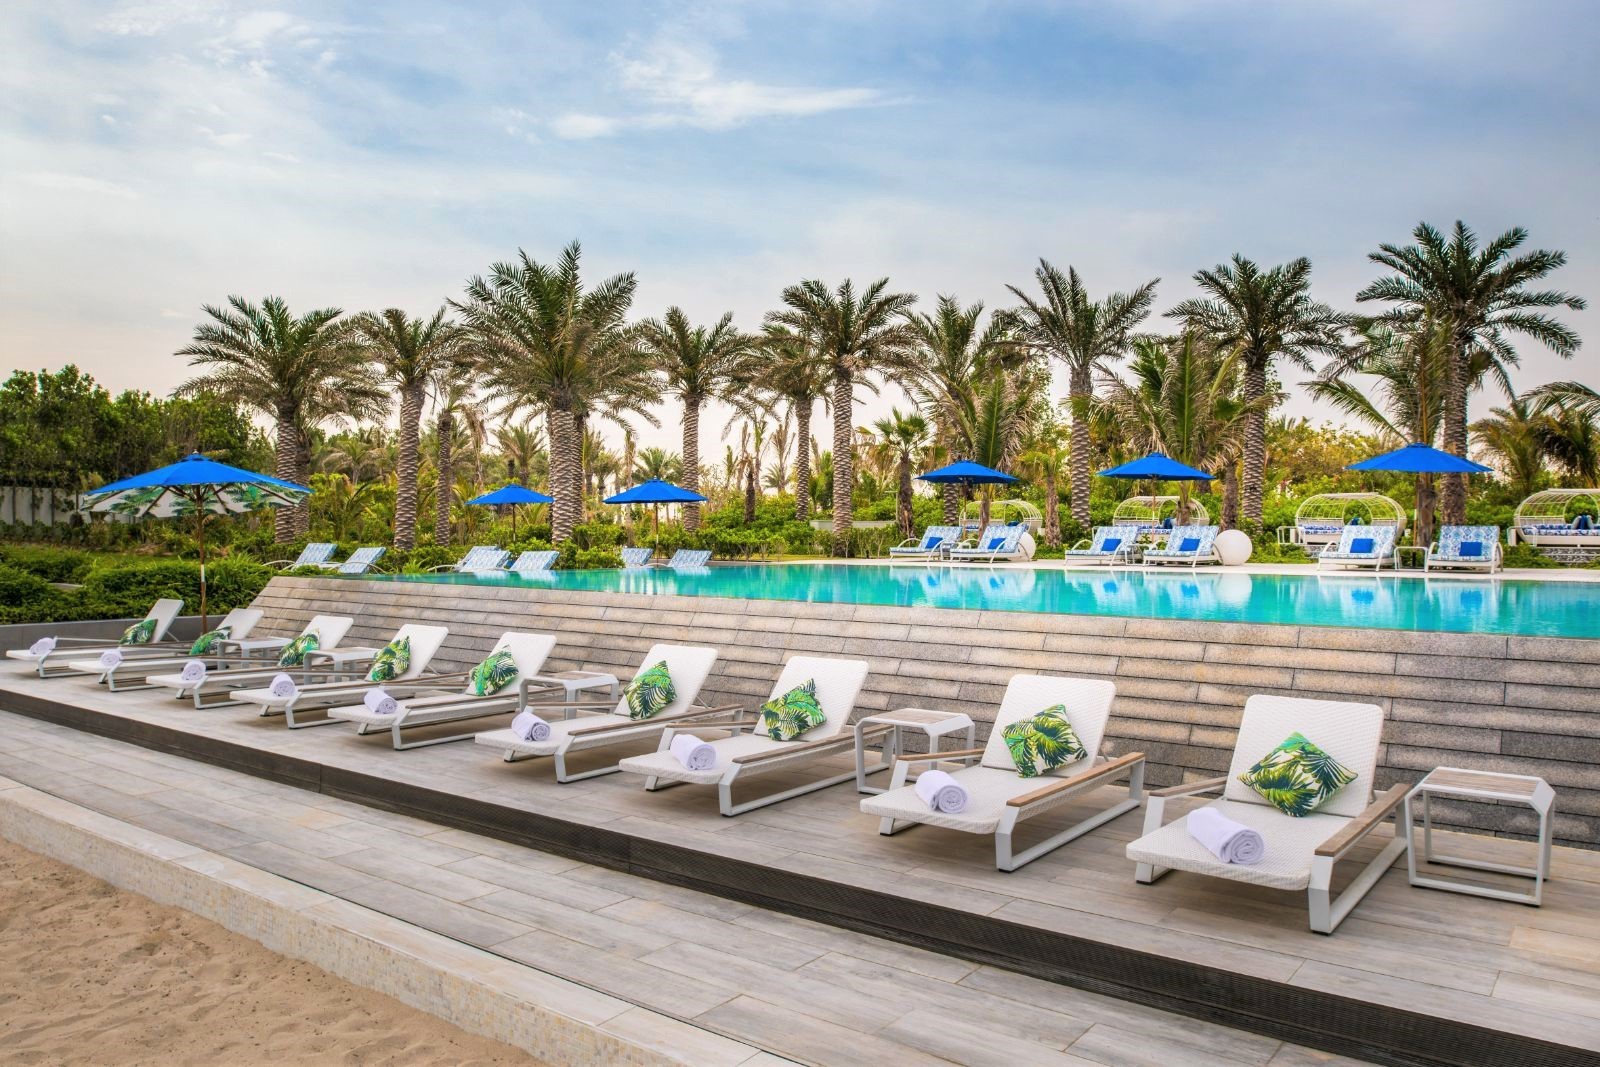 Pool at Smokin Pineapple at Nurai Island resort off the coast of Abu Dhabi in the United Arab Emirates